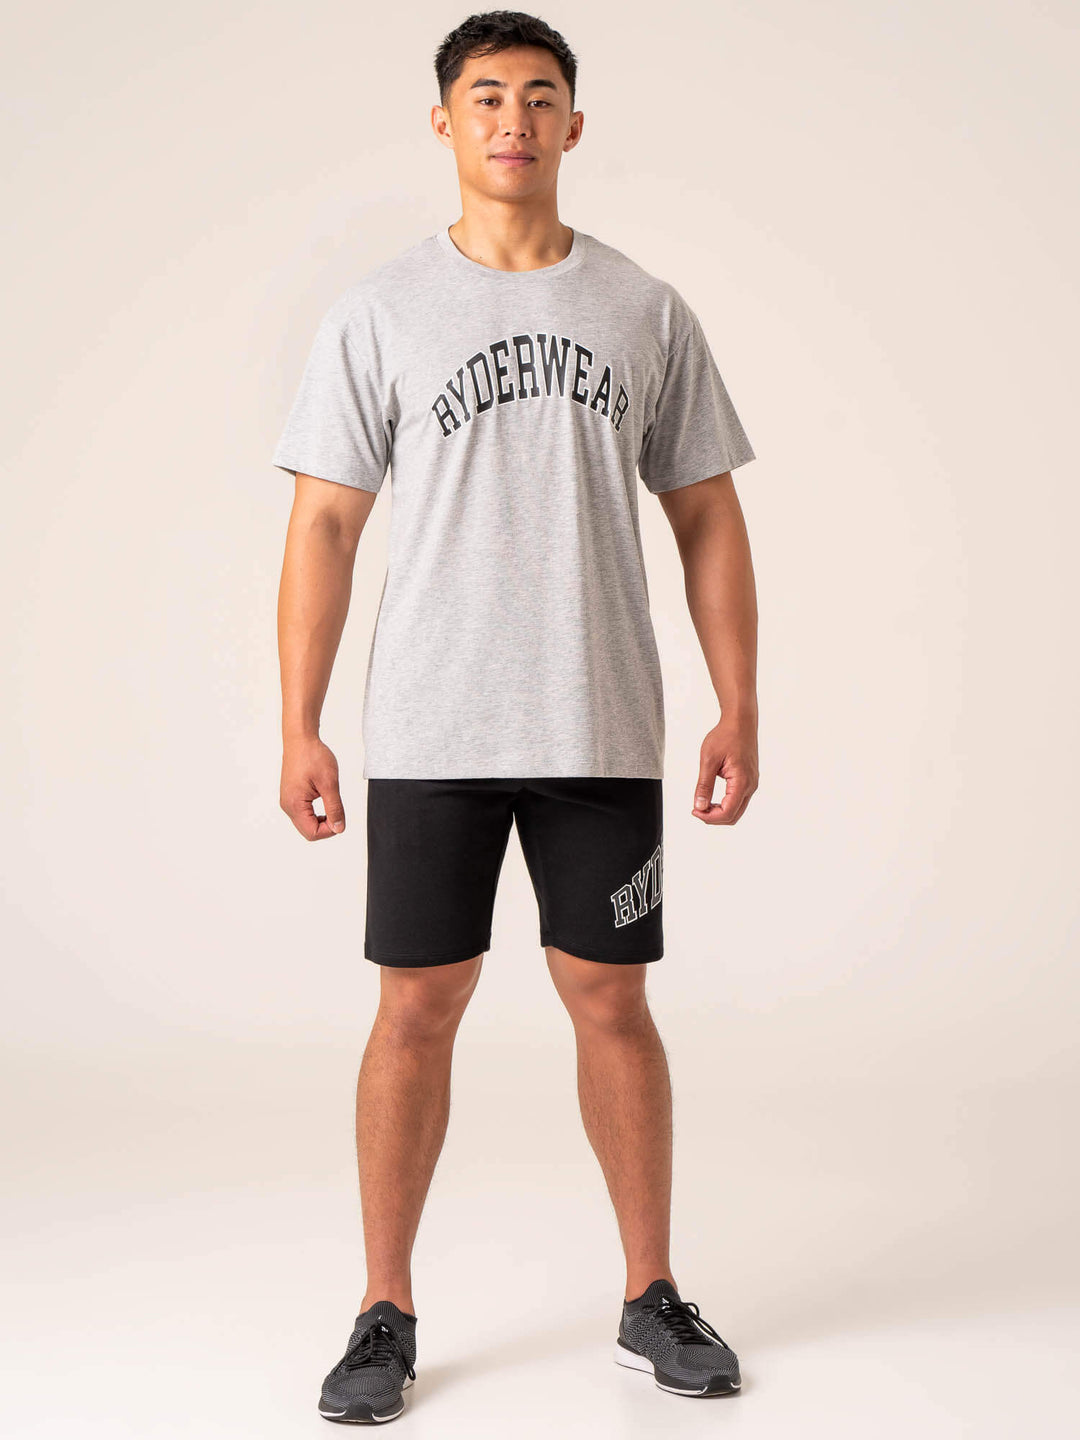 Men's Collegiate T-Shirt - Grey Marl Clothing Ryderwear 